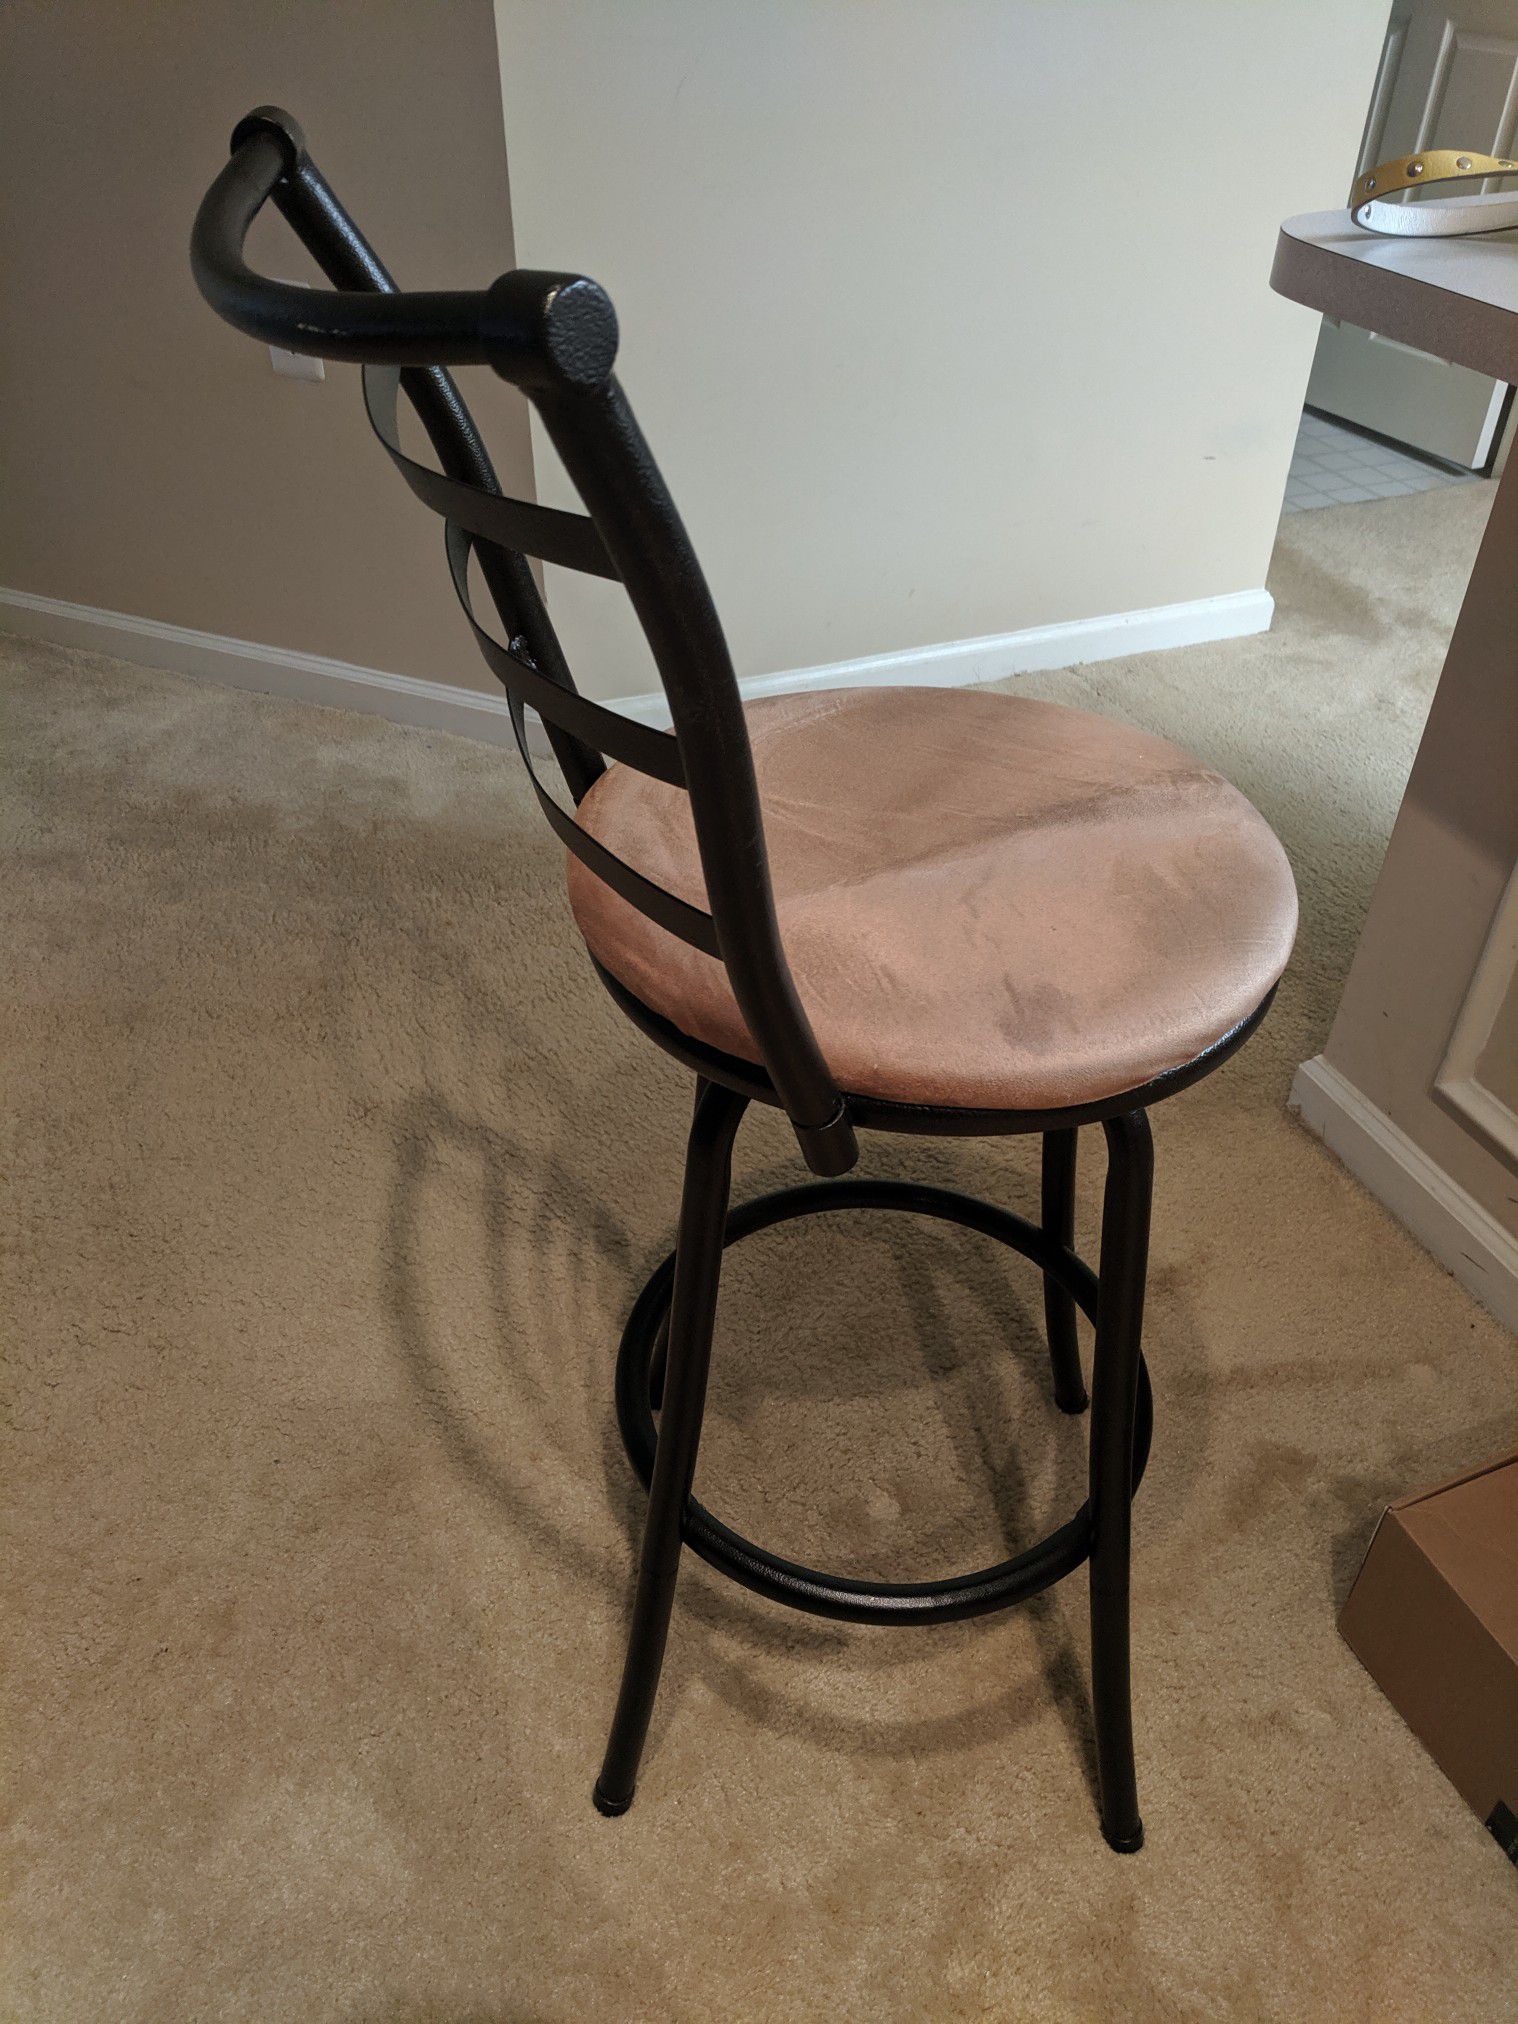 Baar stool great condition